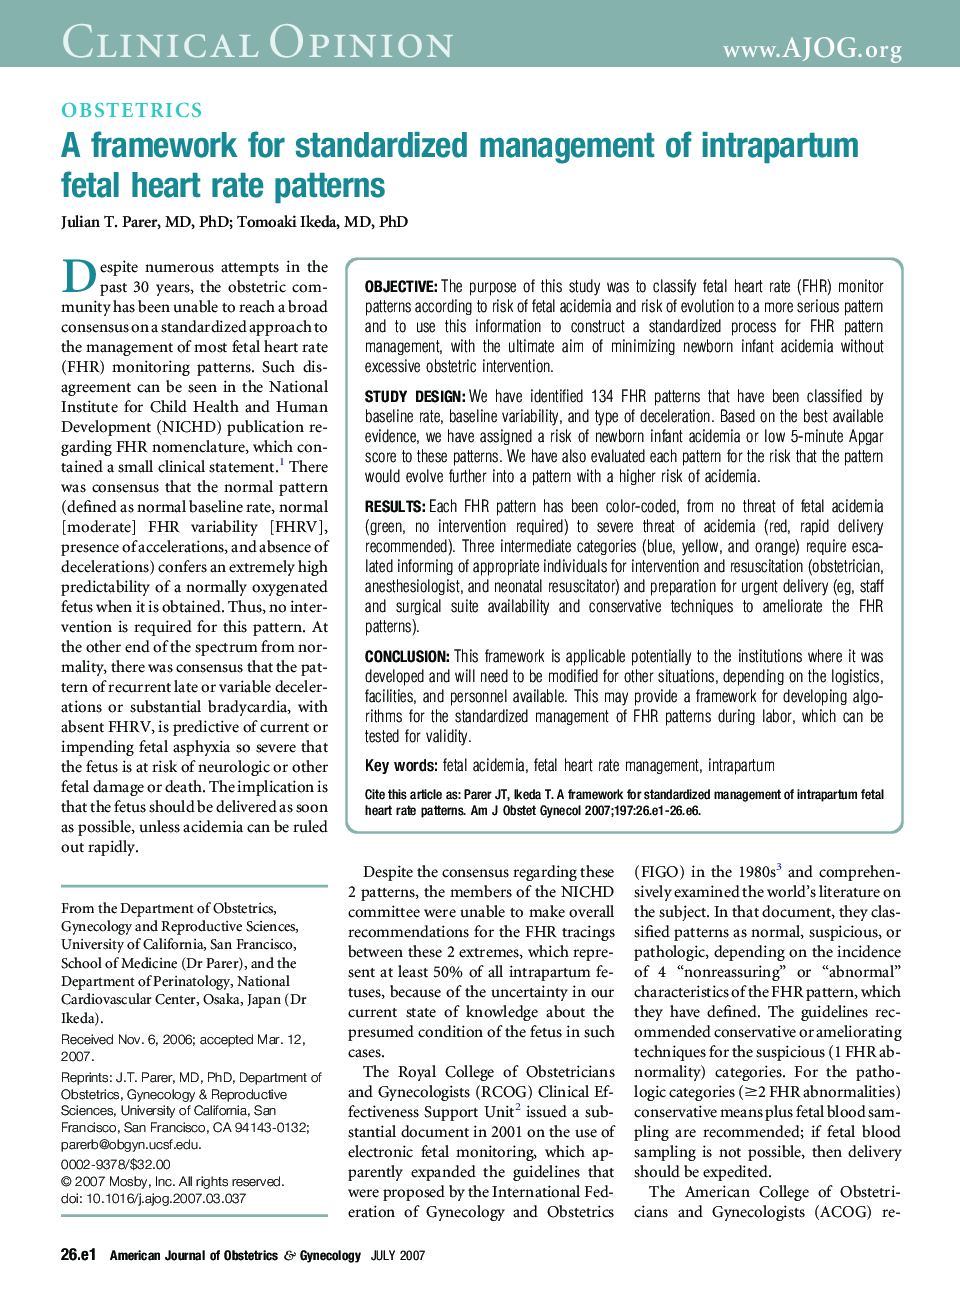 A framework for standardized management of intrapartum fetal heart rate patterns